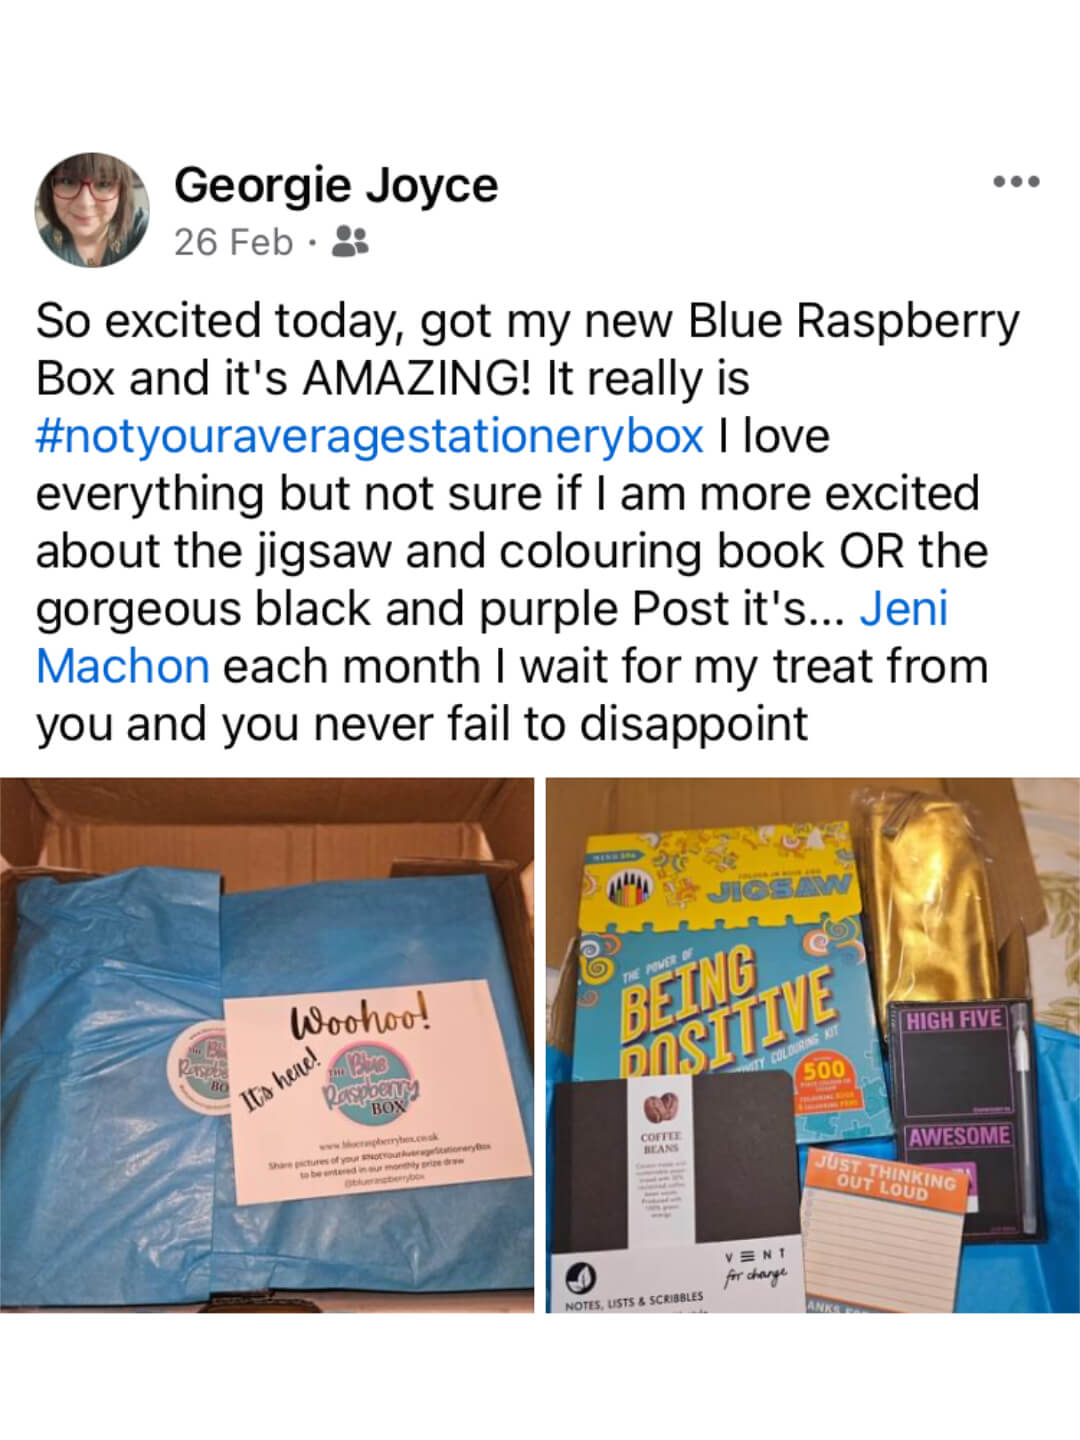 Customer review of Blue Raspberry box